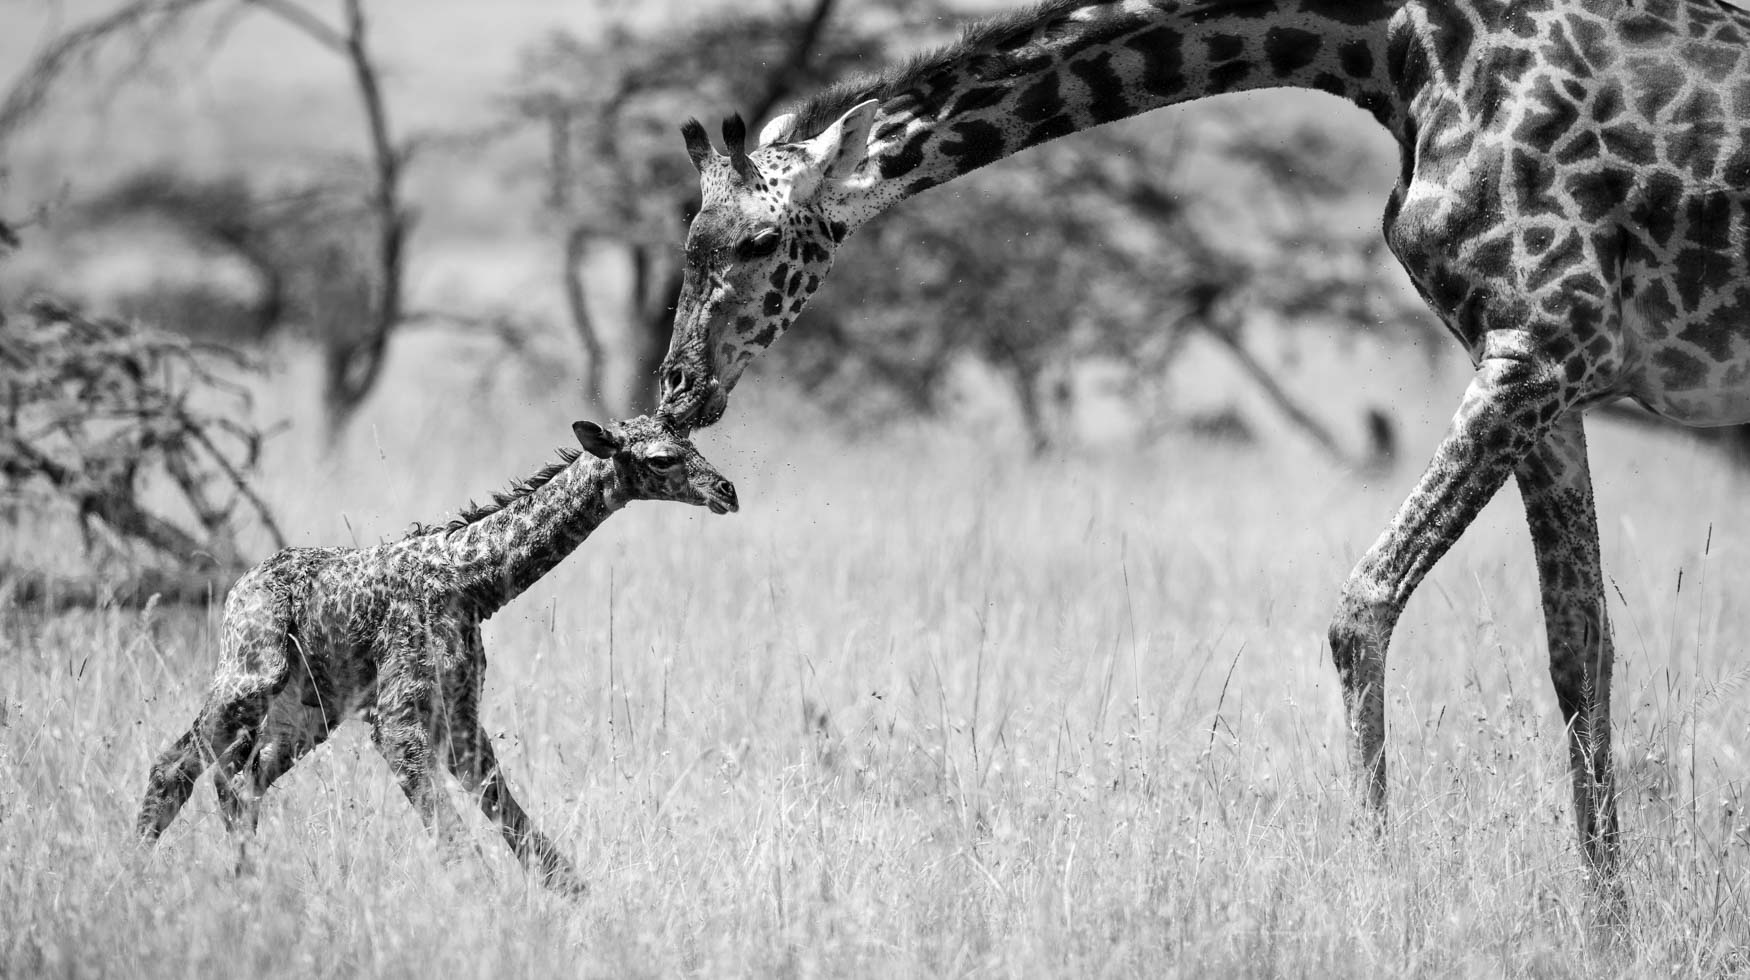 A newborn giraffe takes it first steps in Kenya.